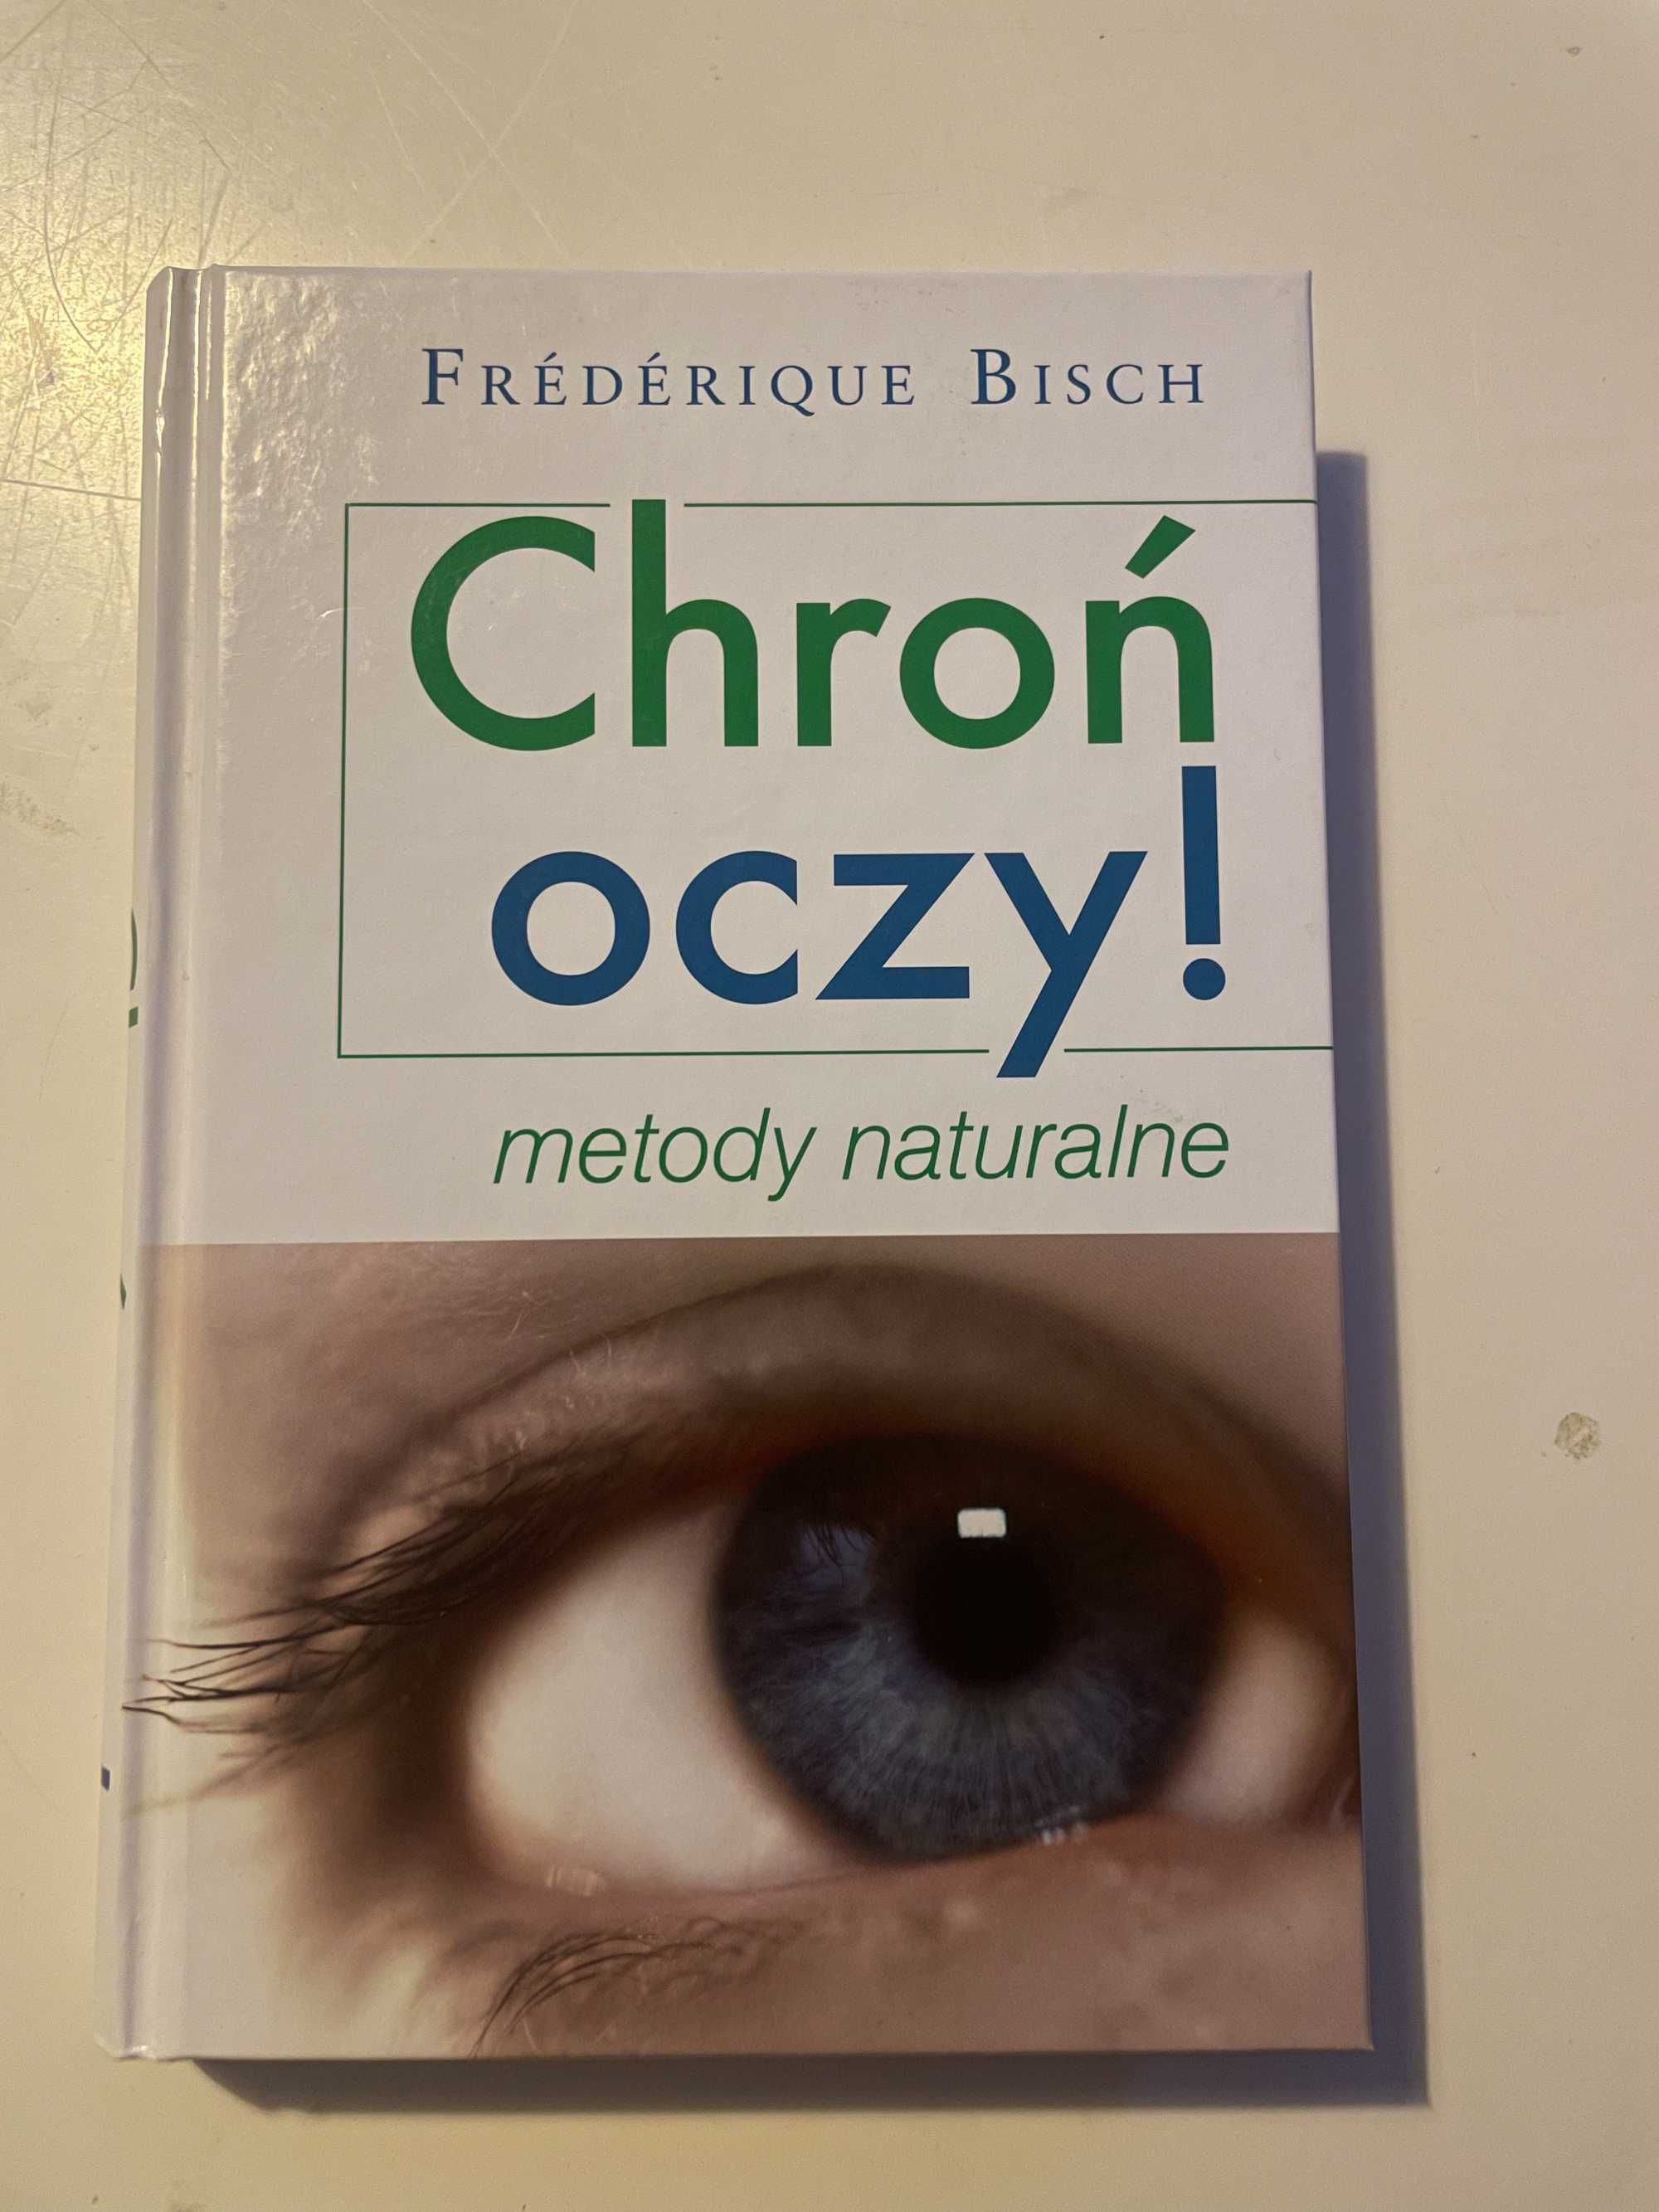 Chroń oczy - metody naturalne - Frederiqe Bisch